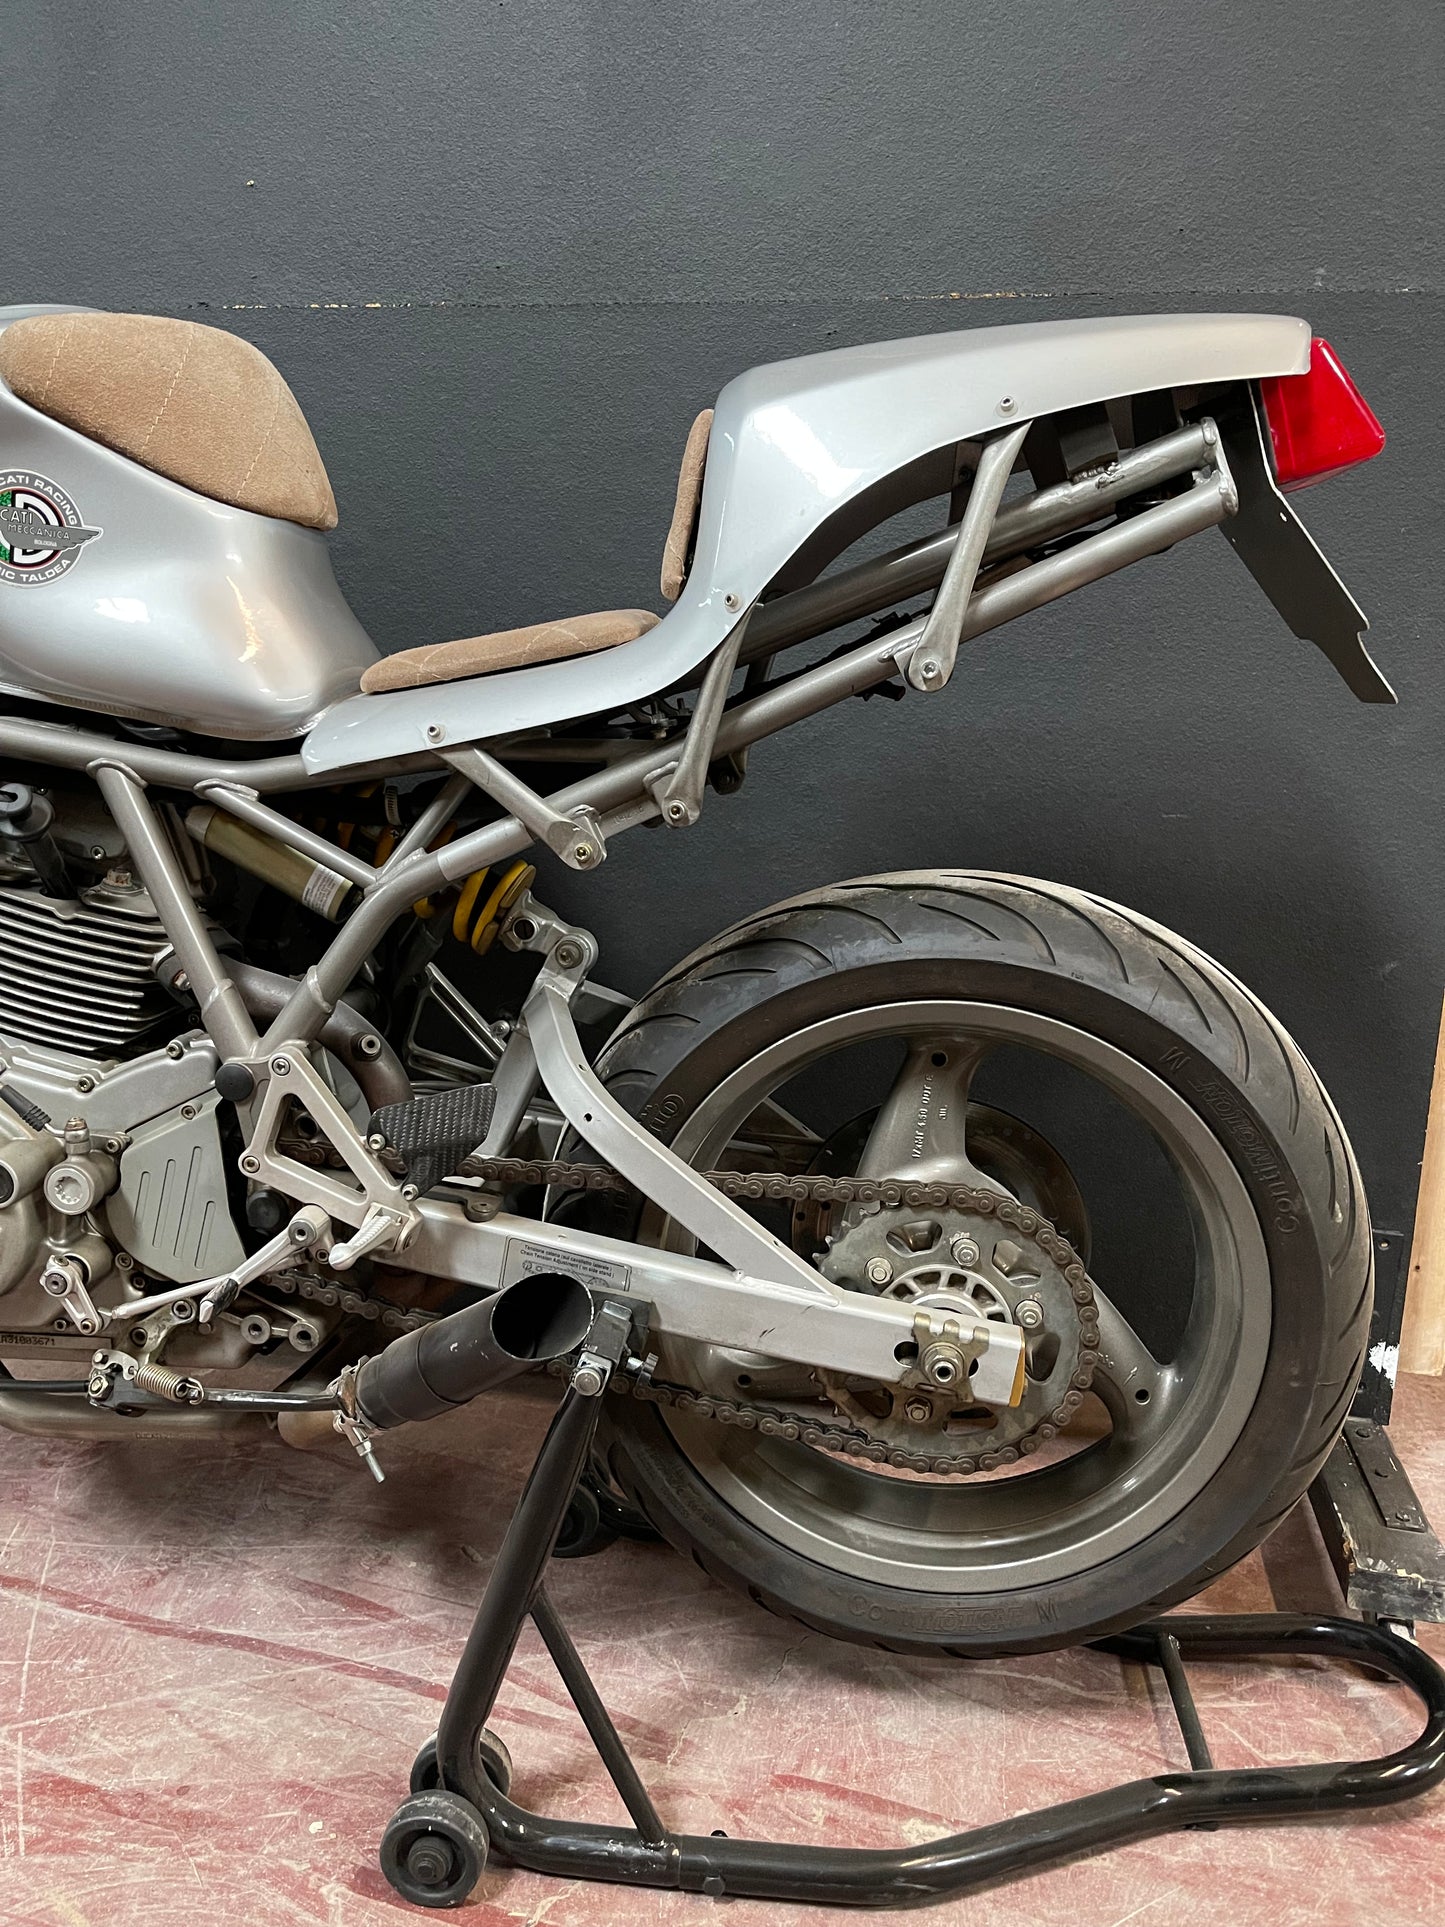 Silver Ducati Motorcycle